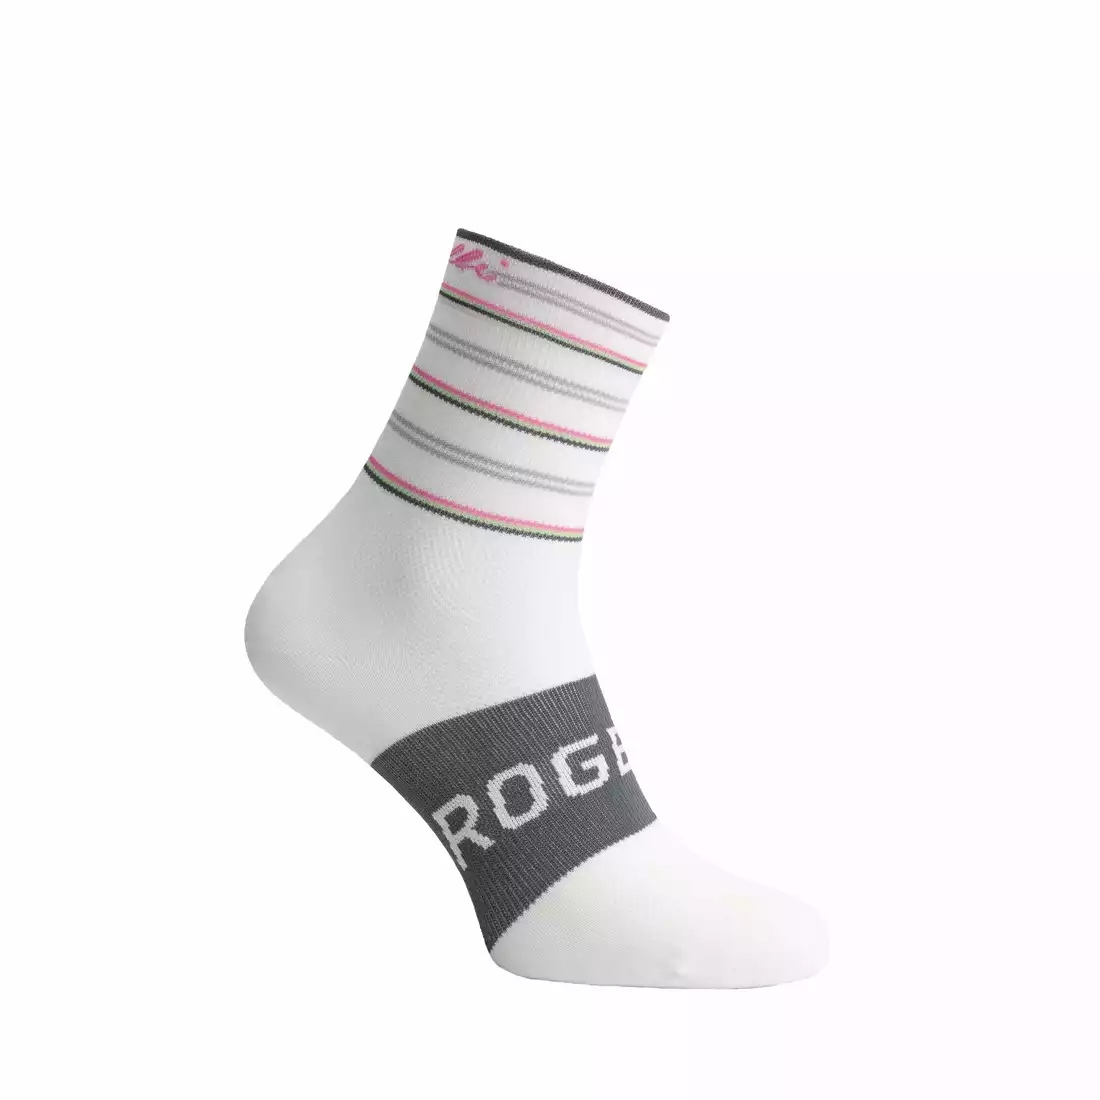 ROGELLI STRIPE Women's cycling socks, white